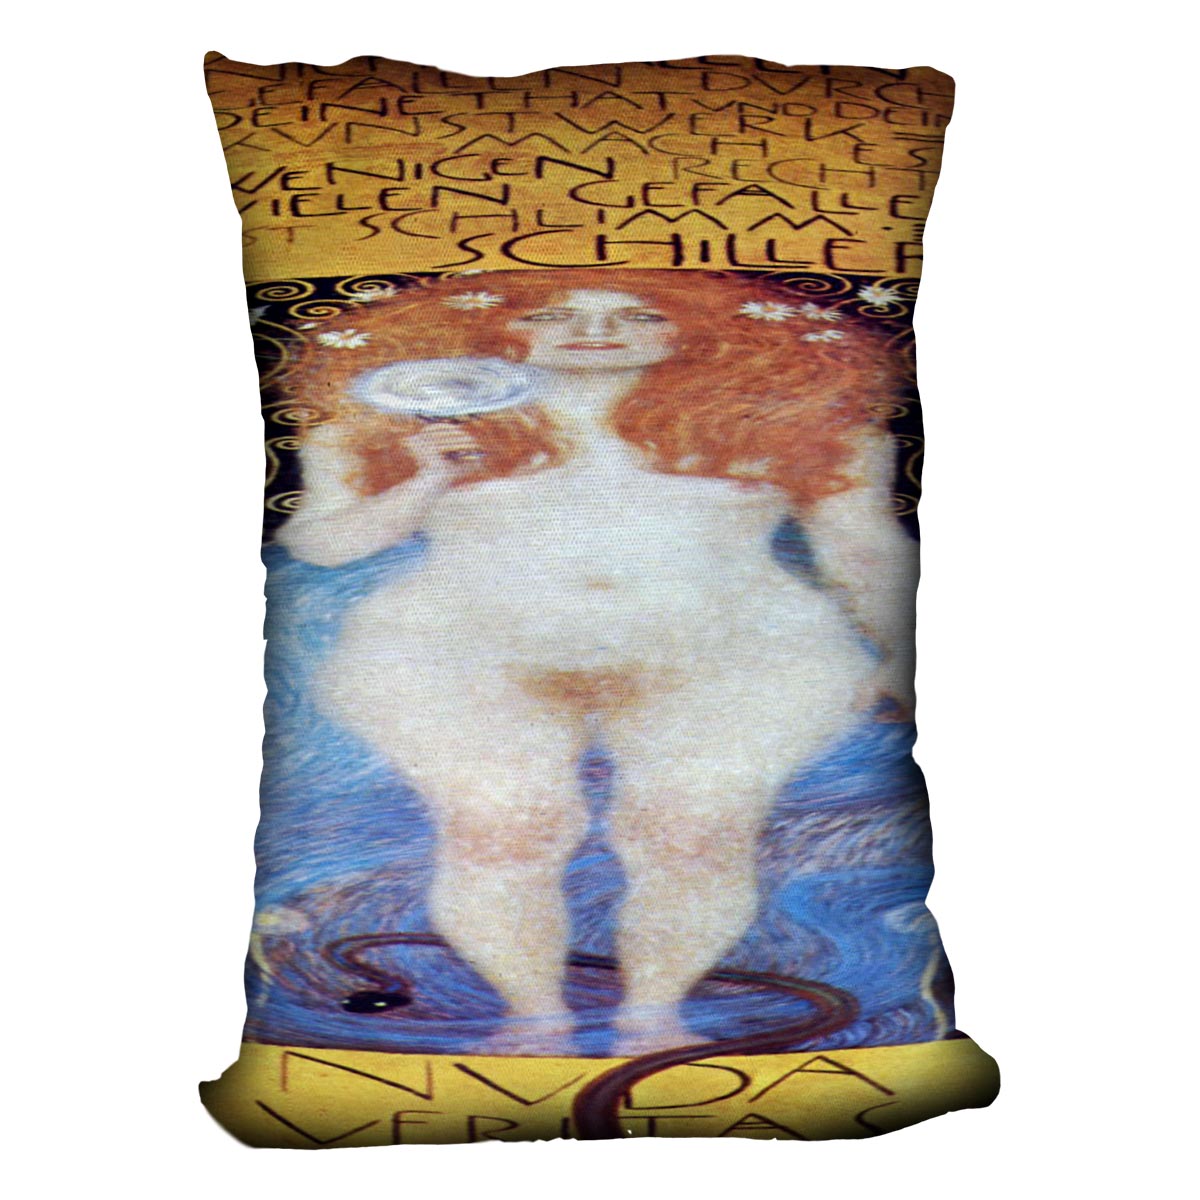 Nuda Veritas Naked Truth by Klimt Cushion